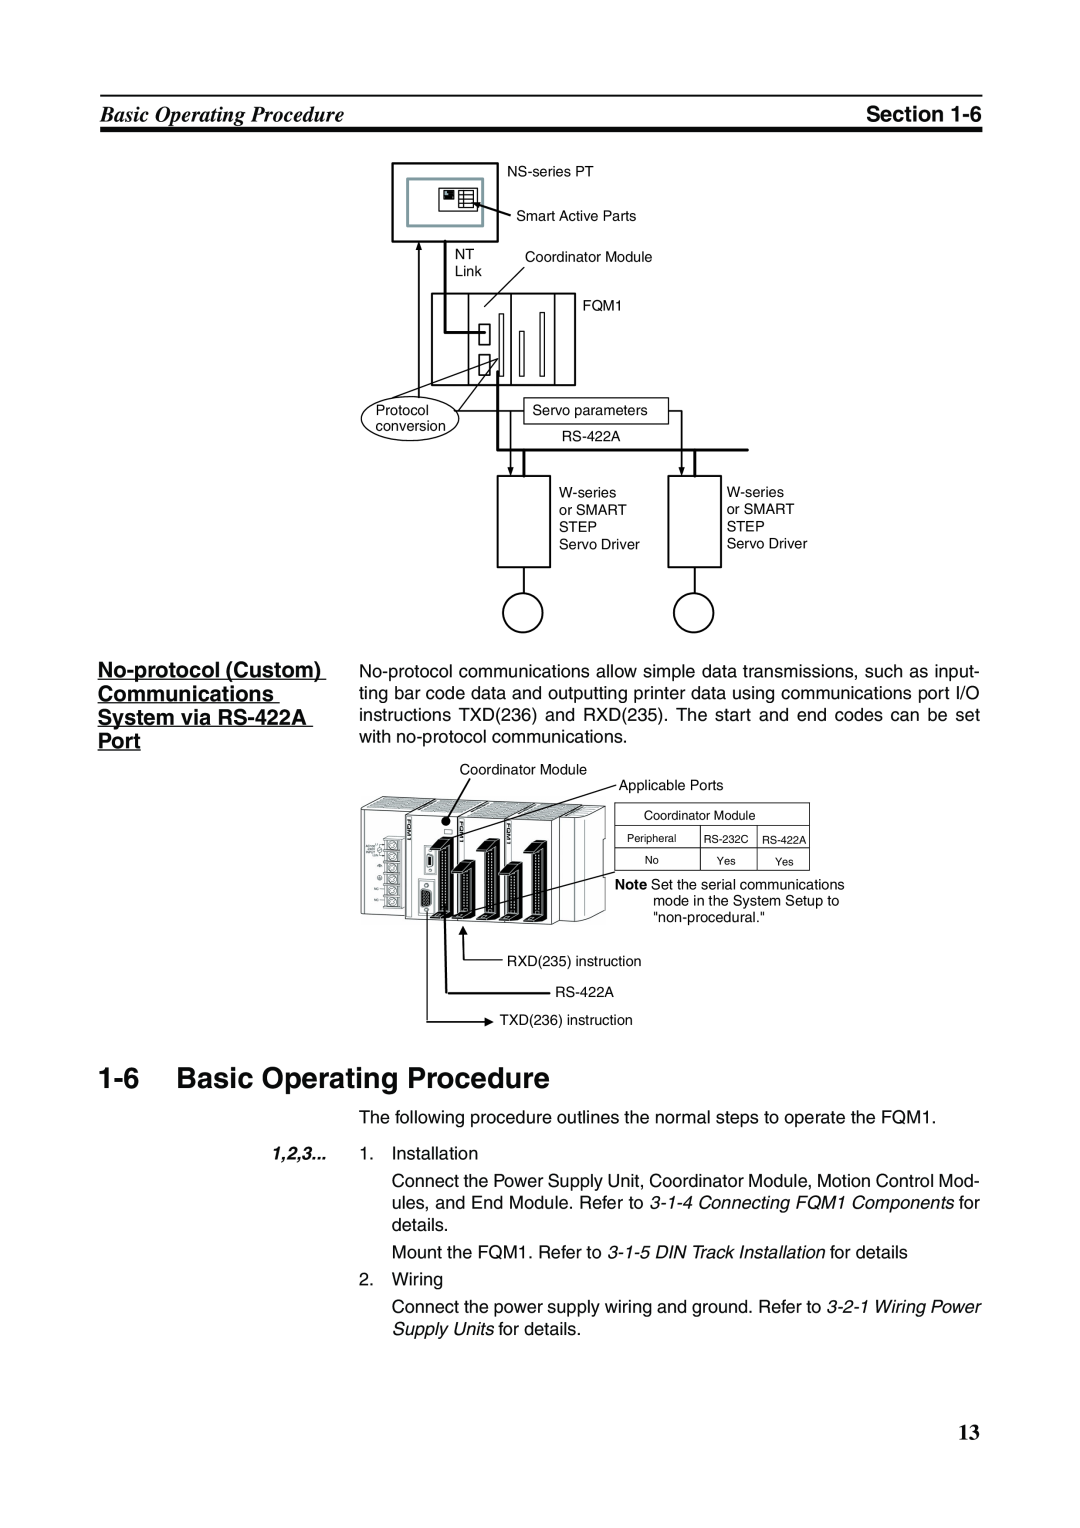 Omron FQM1-CM001, FQM1-MMA21, FQM1-MMP21 operation manual 1-6Basic Operating Procedure, Section 